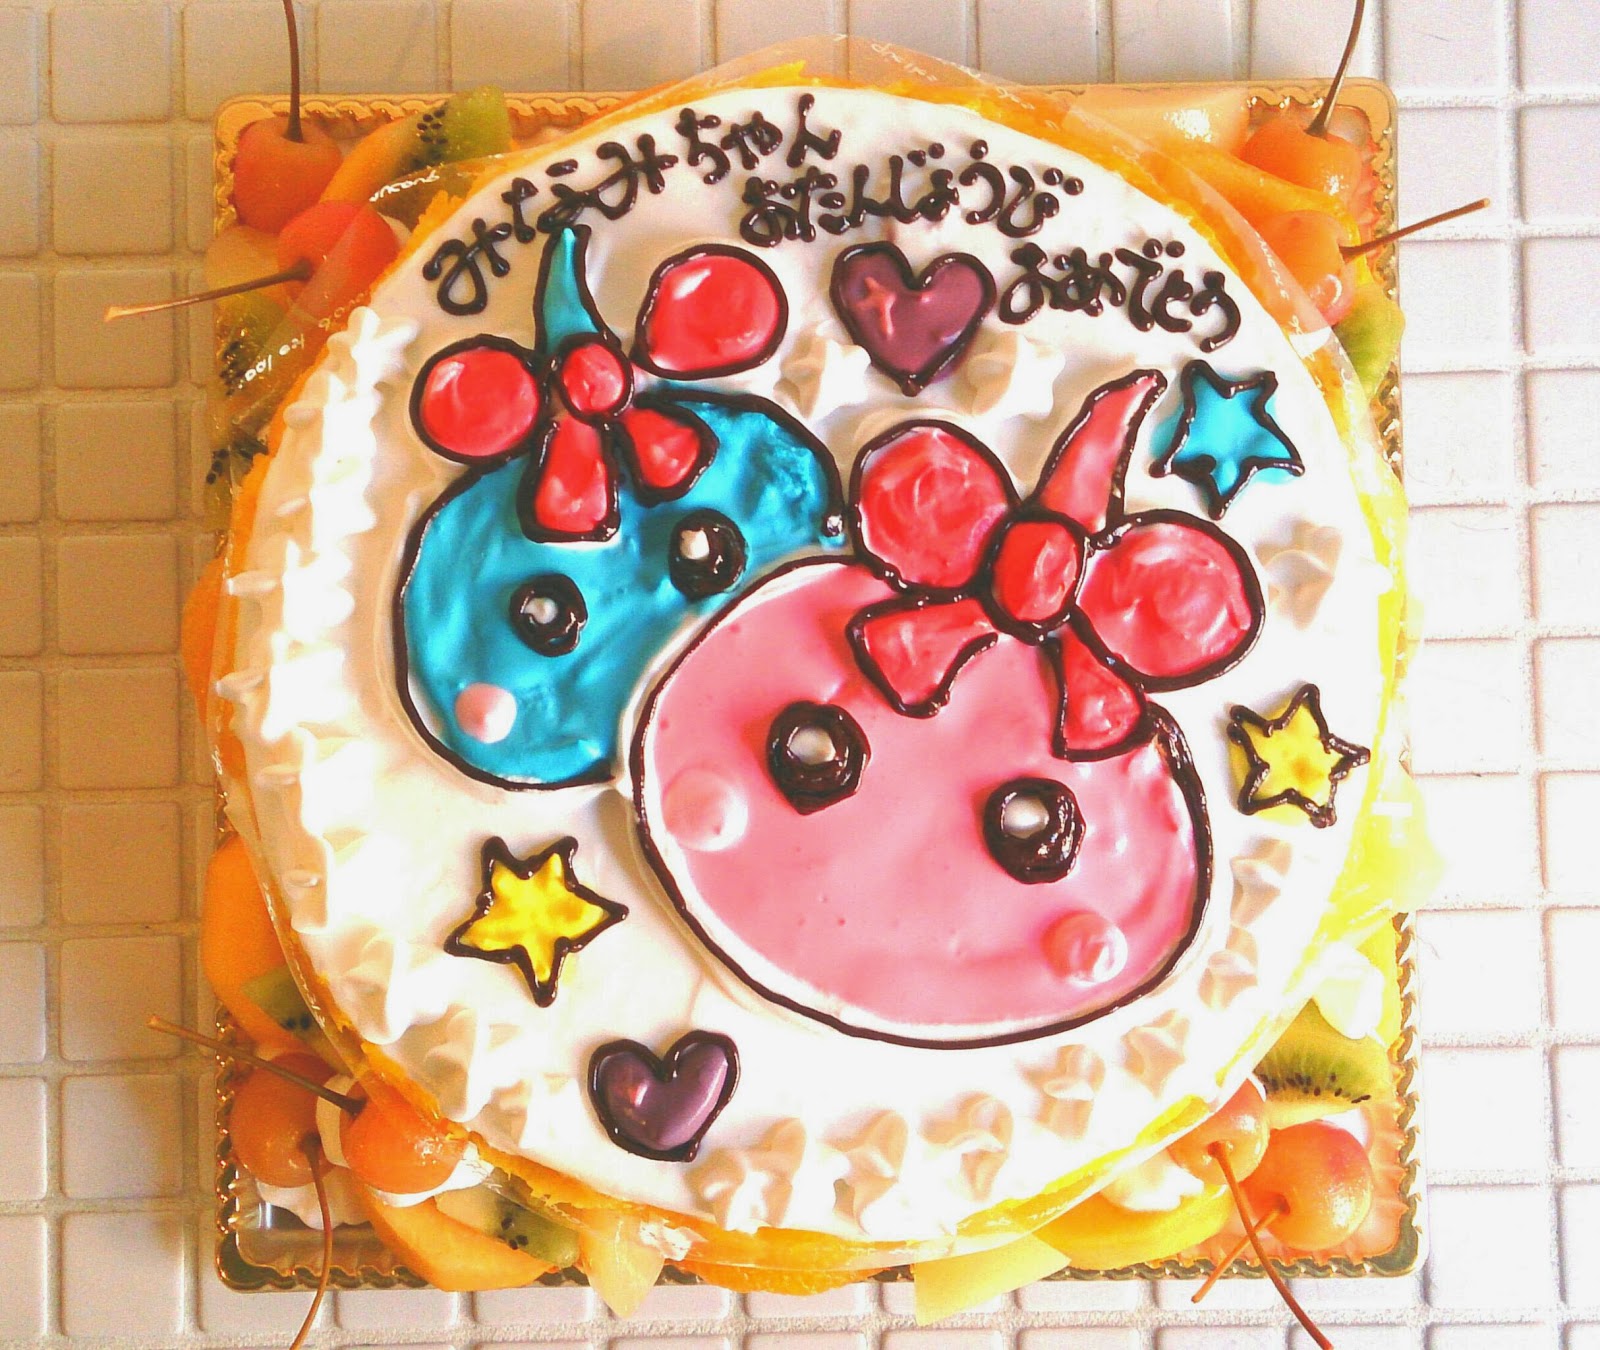 Bake House ほっぺちゃんのバースデーケーキ